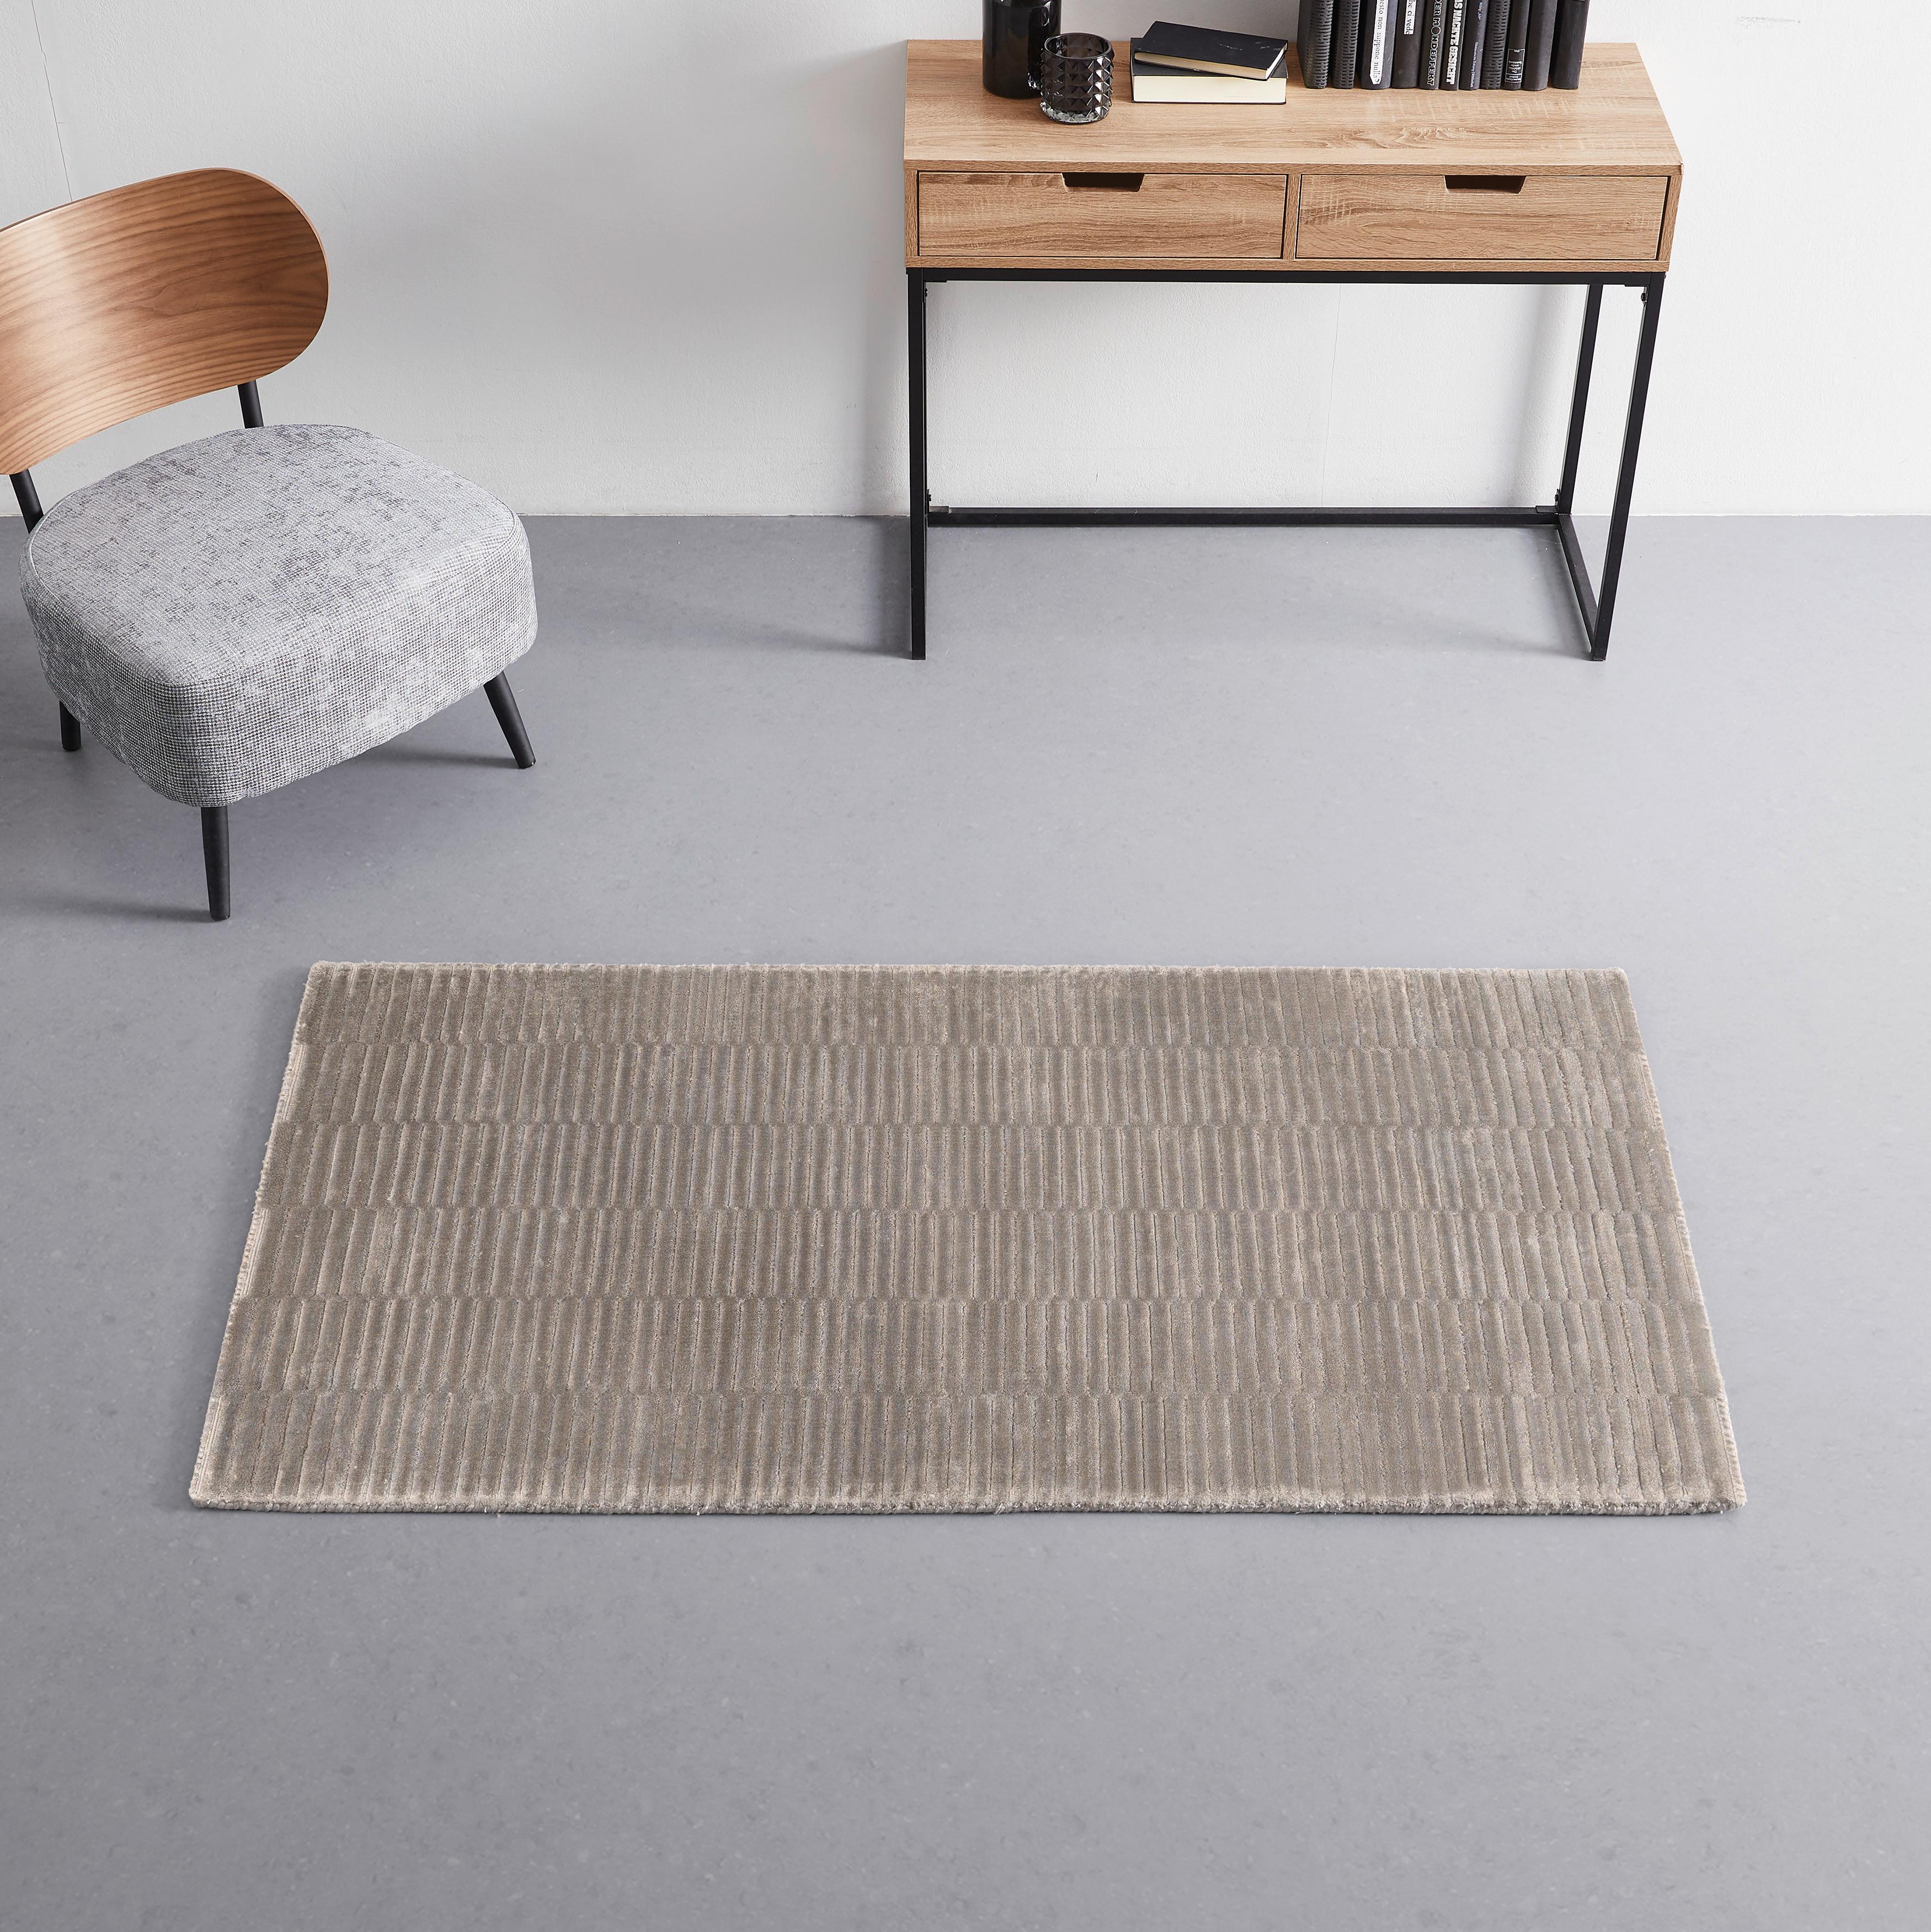 Teppich Calma in Grau ca. 80x150cm - Grau, MODERN, Textil (80/150cm) - Bessagi Home